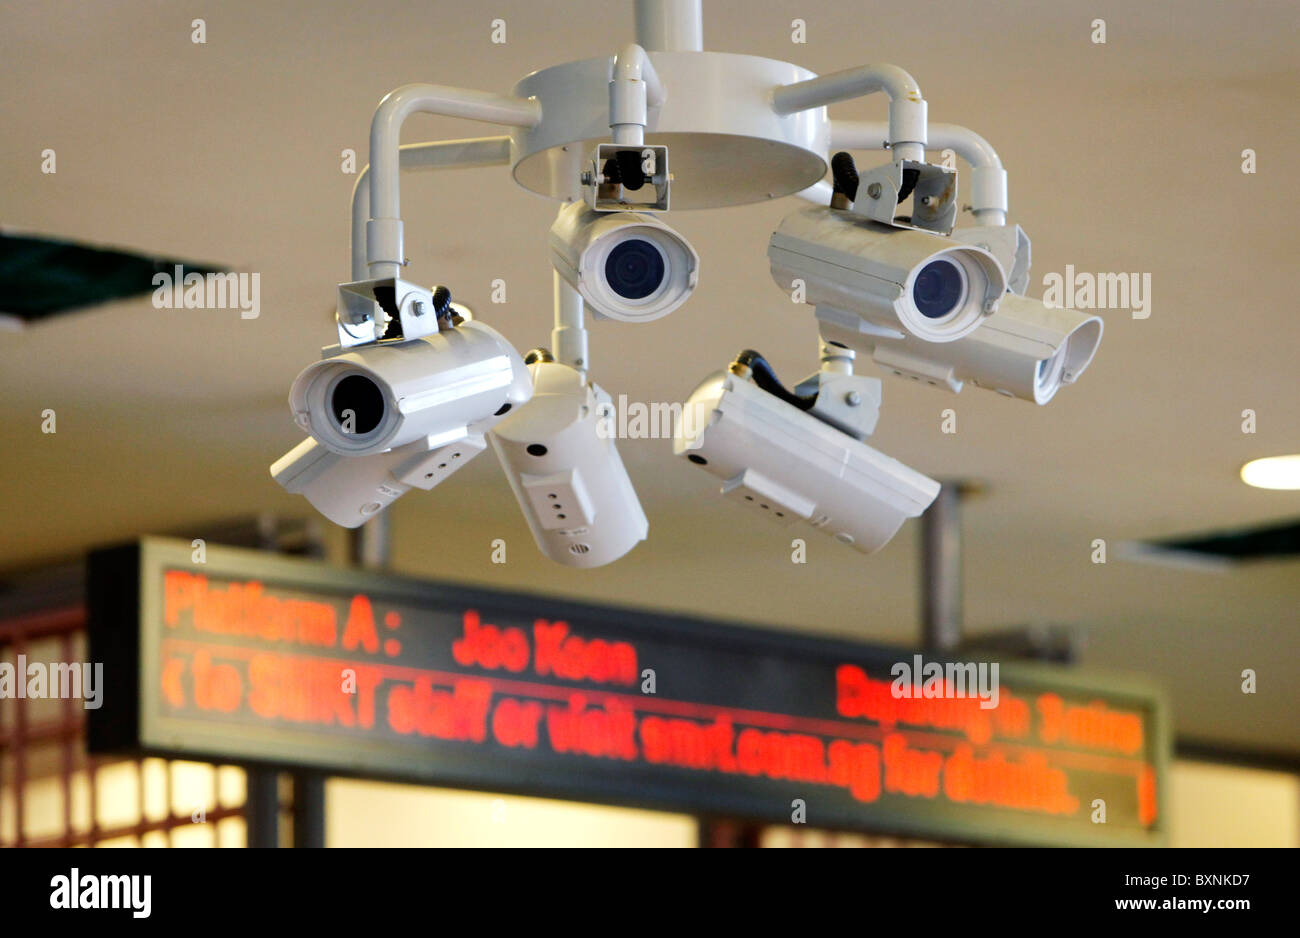 Singapore: surveillance cameras at a MRT (Mass Rapid Transit) subway station Stock Photo